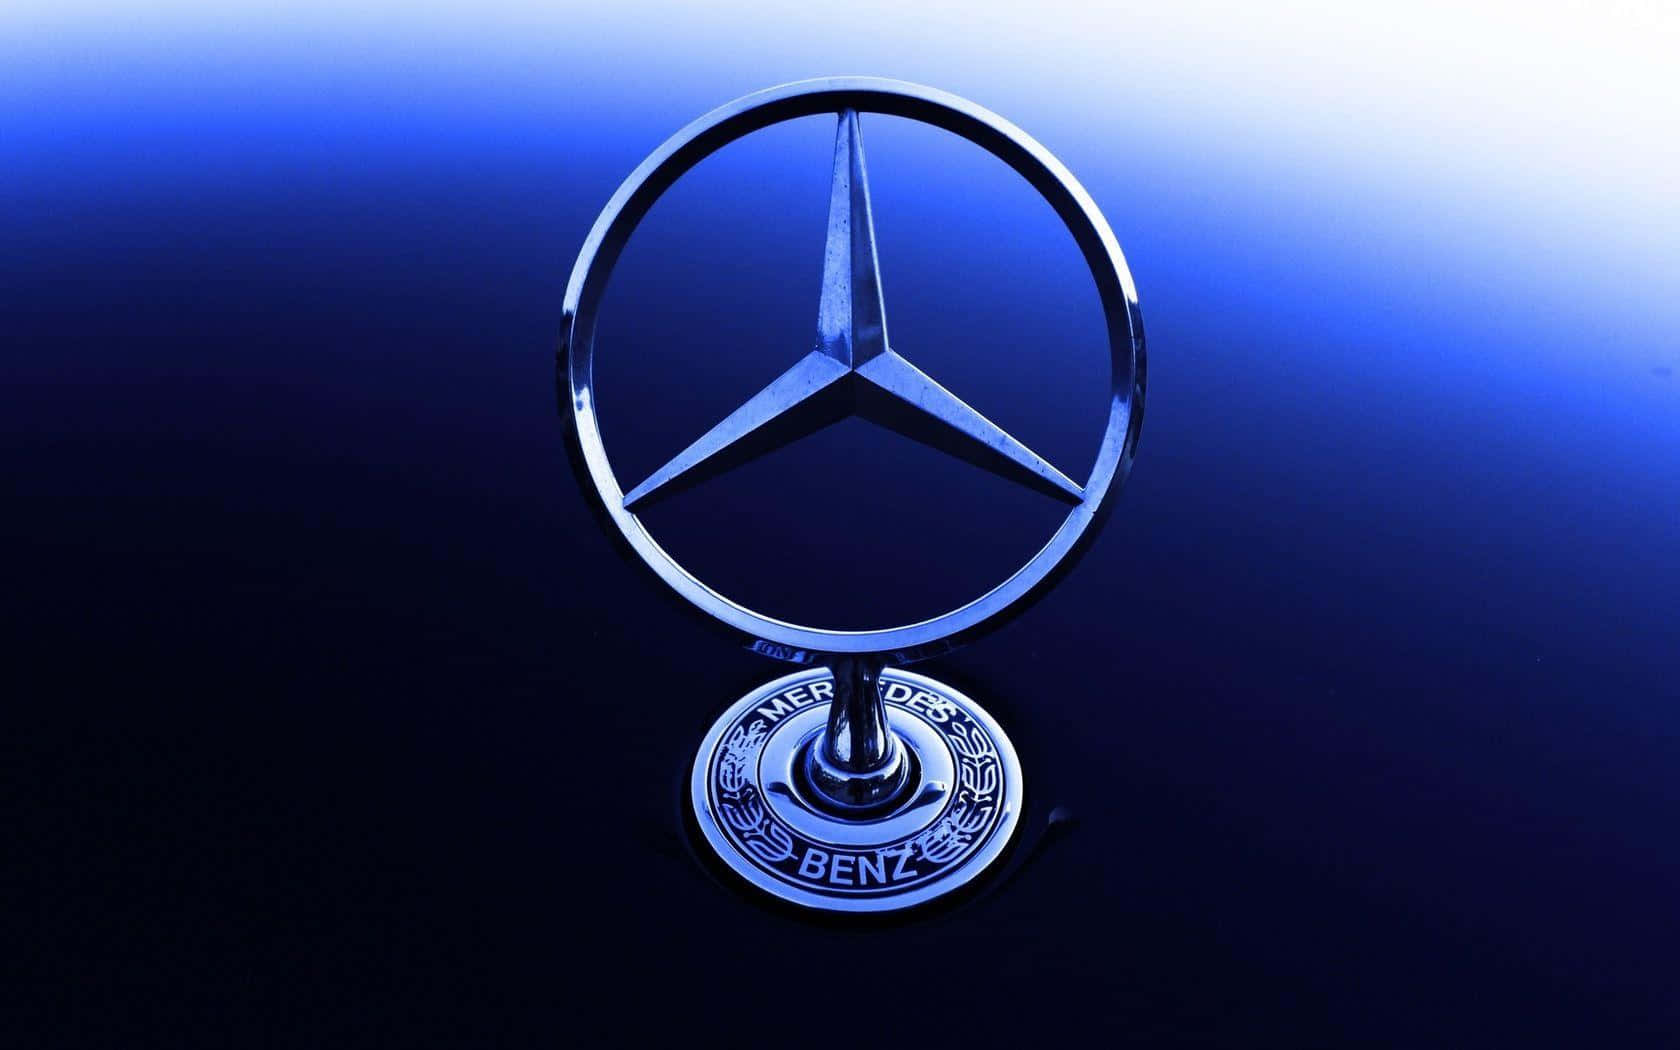 Mercedesbenz-logotypsbakgrundsbild (for Computer Or Mobile Wallpaper)